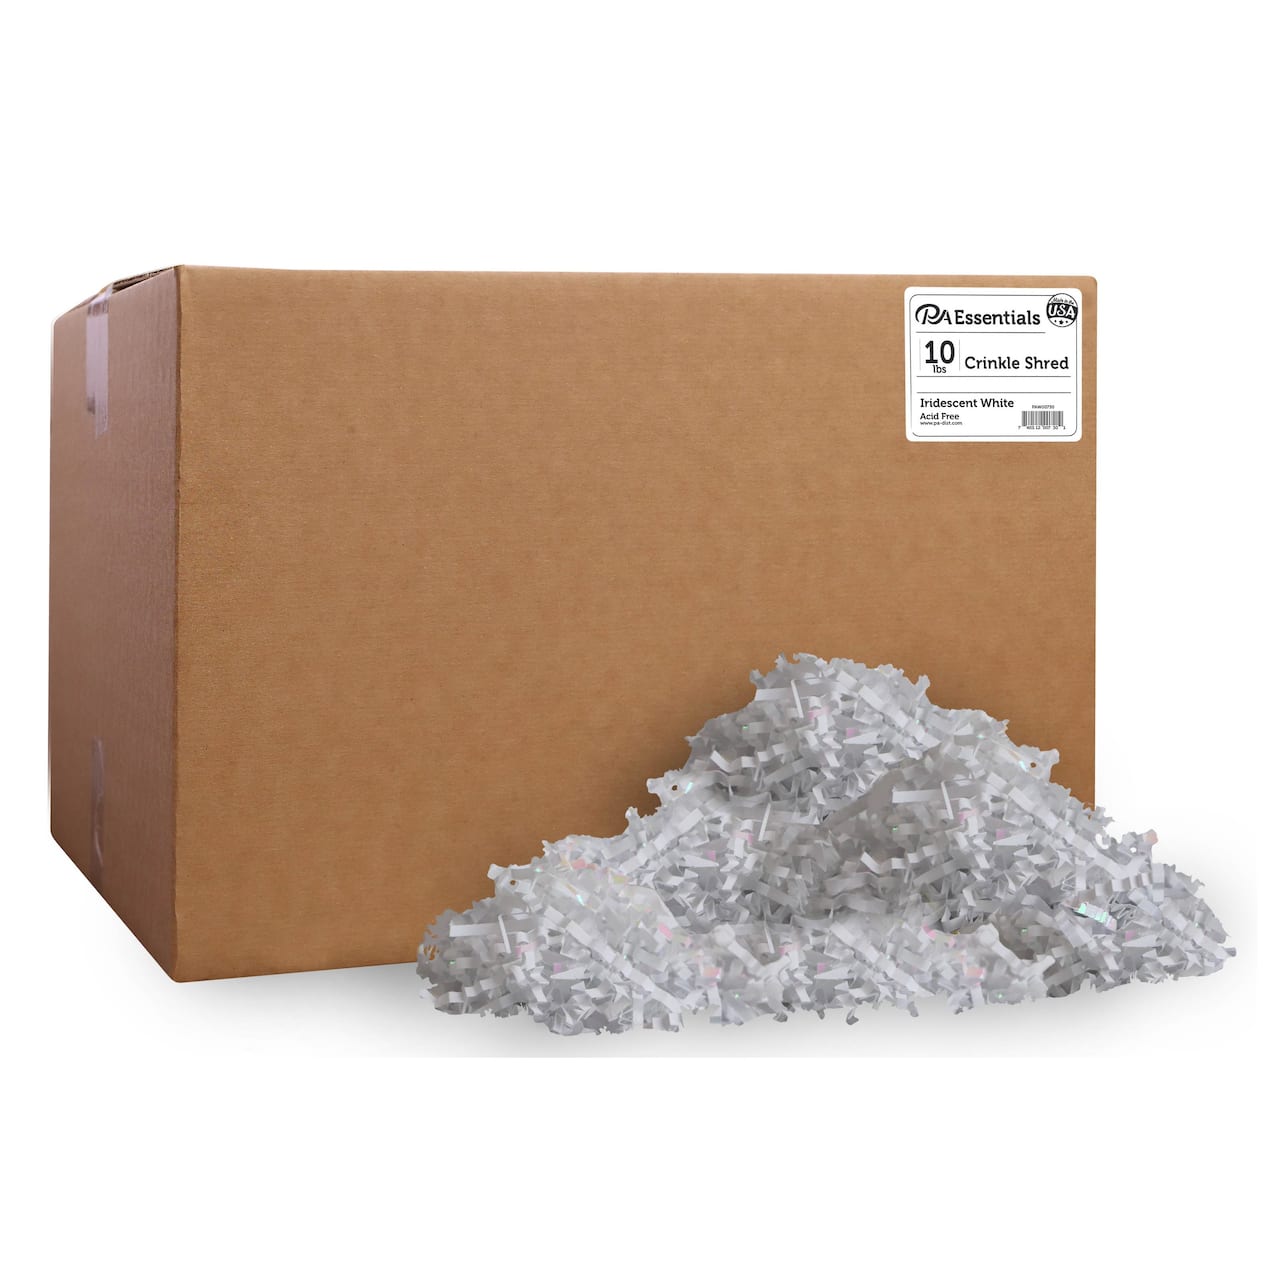 PA Essentials Crinkle Shred Box, 10lb.